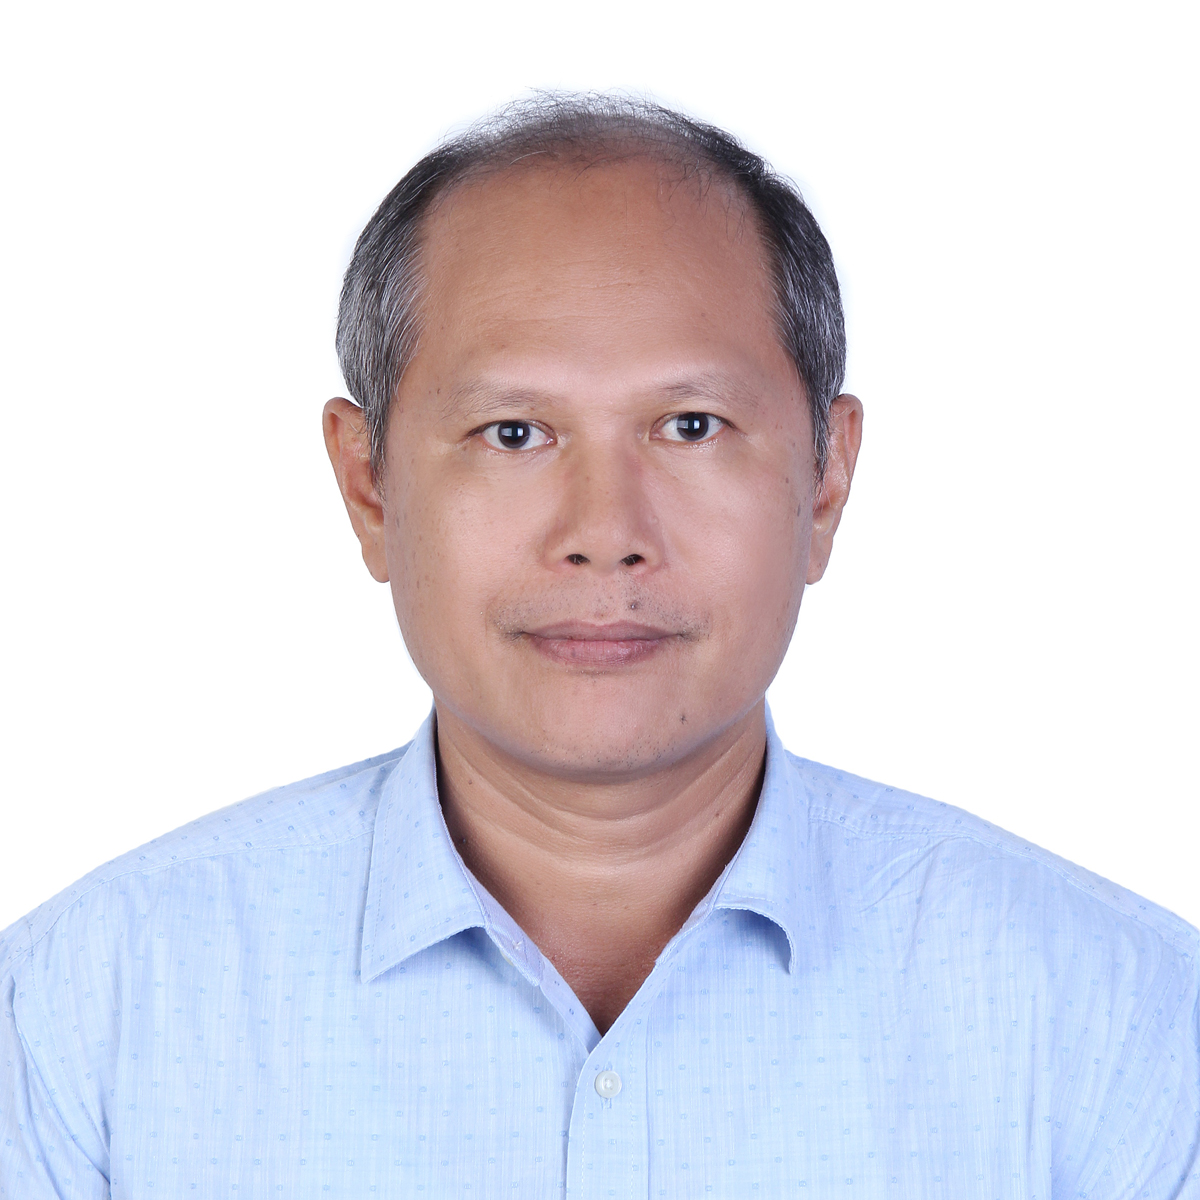 Prof. Dr. Janianton Damanik, M.Si.